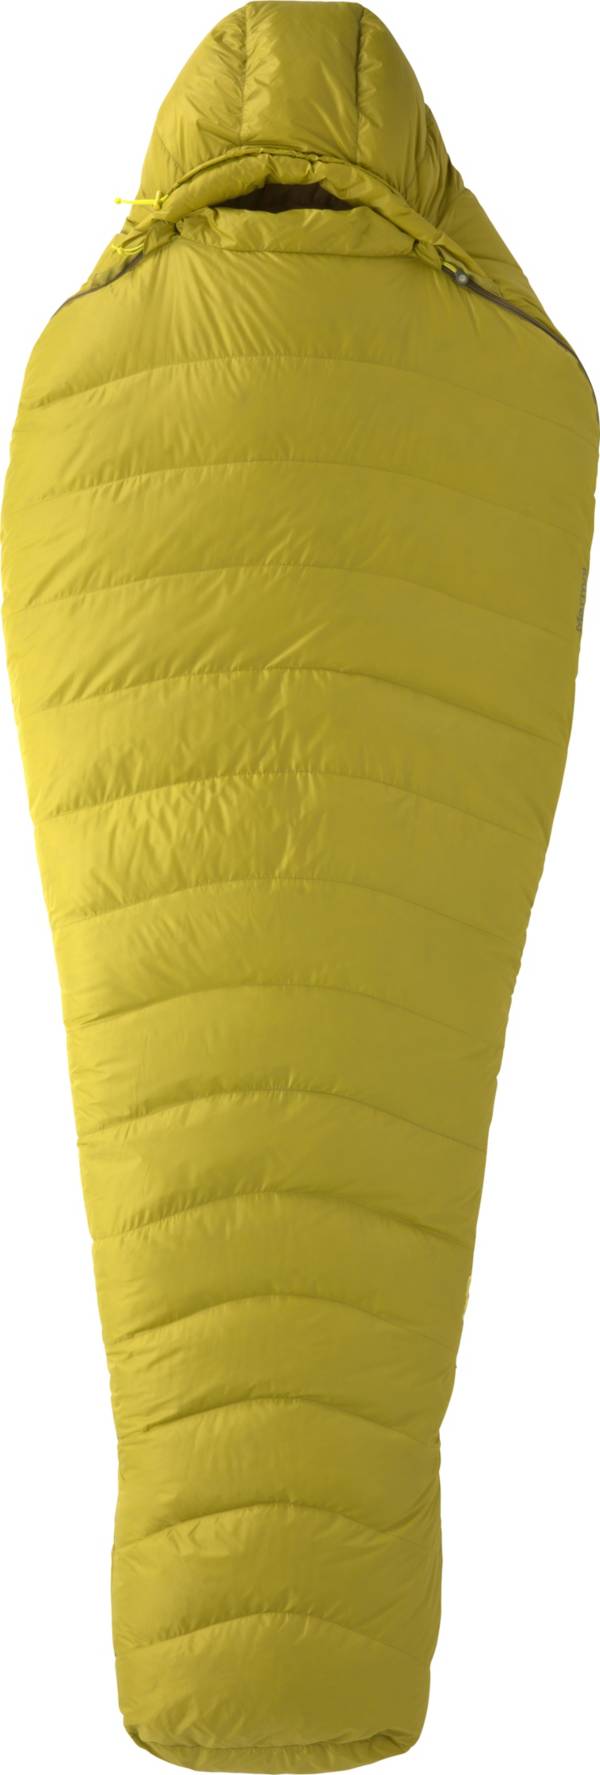 Marmot Hydrogen 30°F Sleeping Bag product image